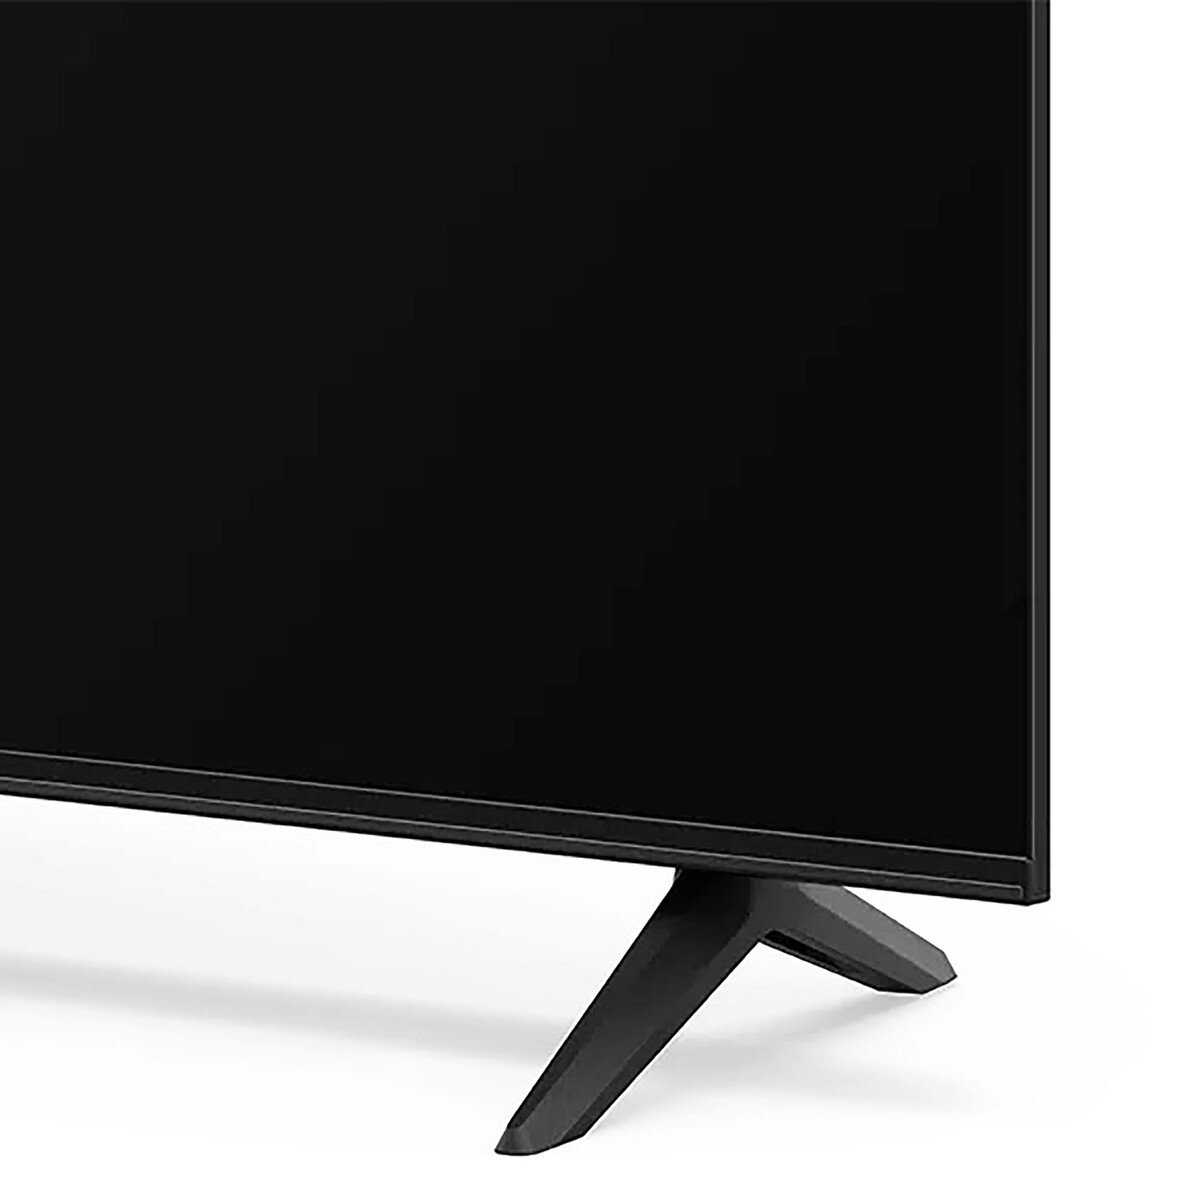 TCL 65 Inches 4K Google Smart LED TV, 65P637